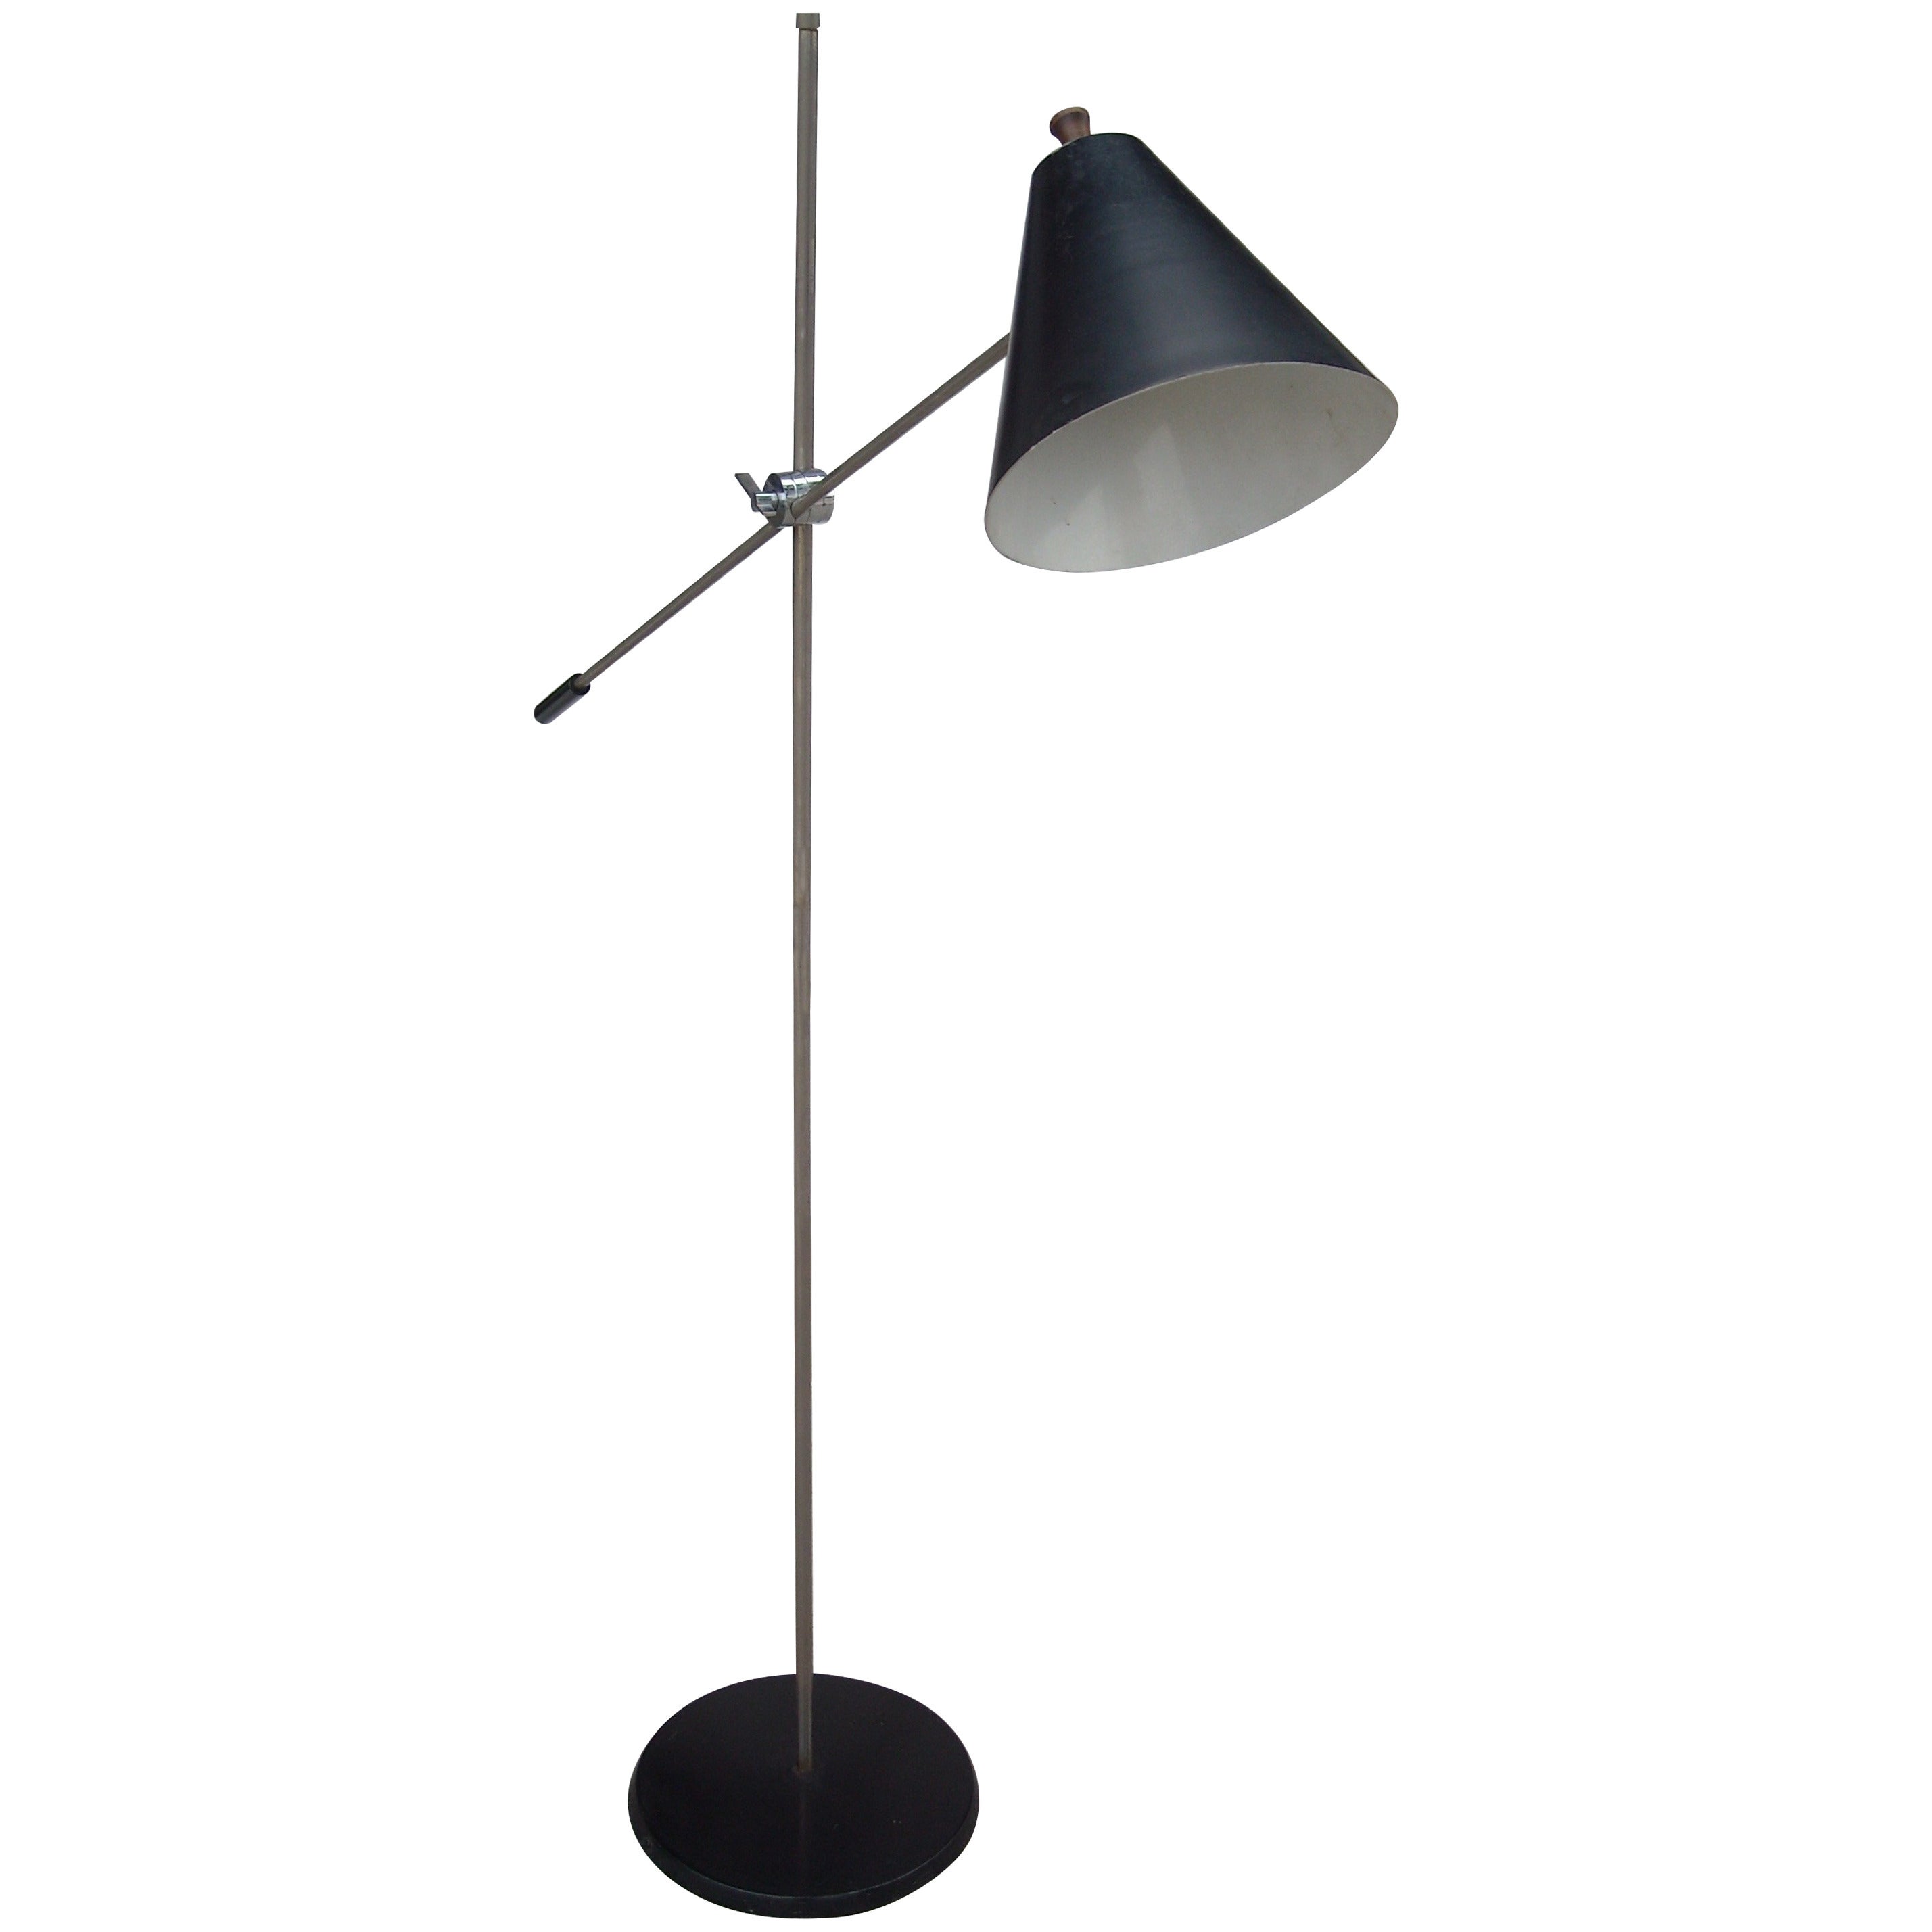 Gino Sarfatti Style Adjustable, Chrome/Paint Floor Lamp for Laurel Co Label